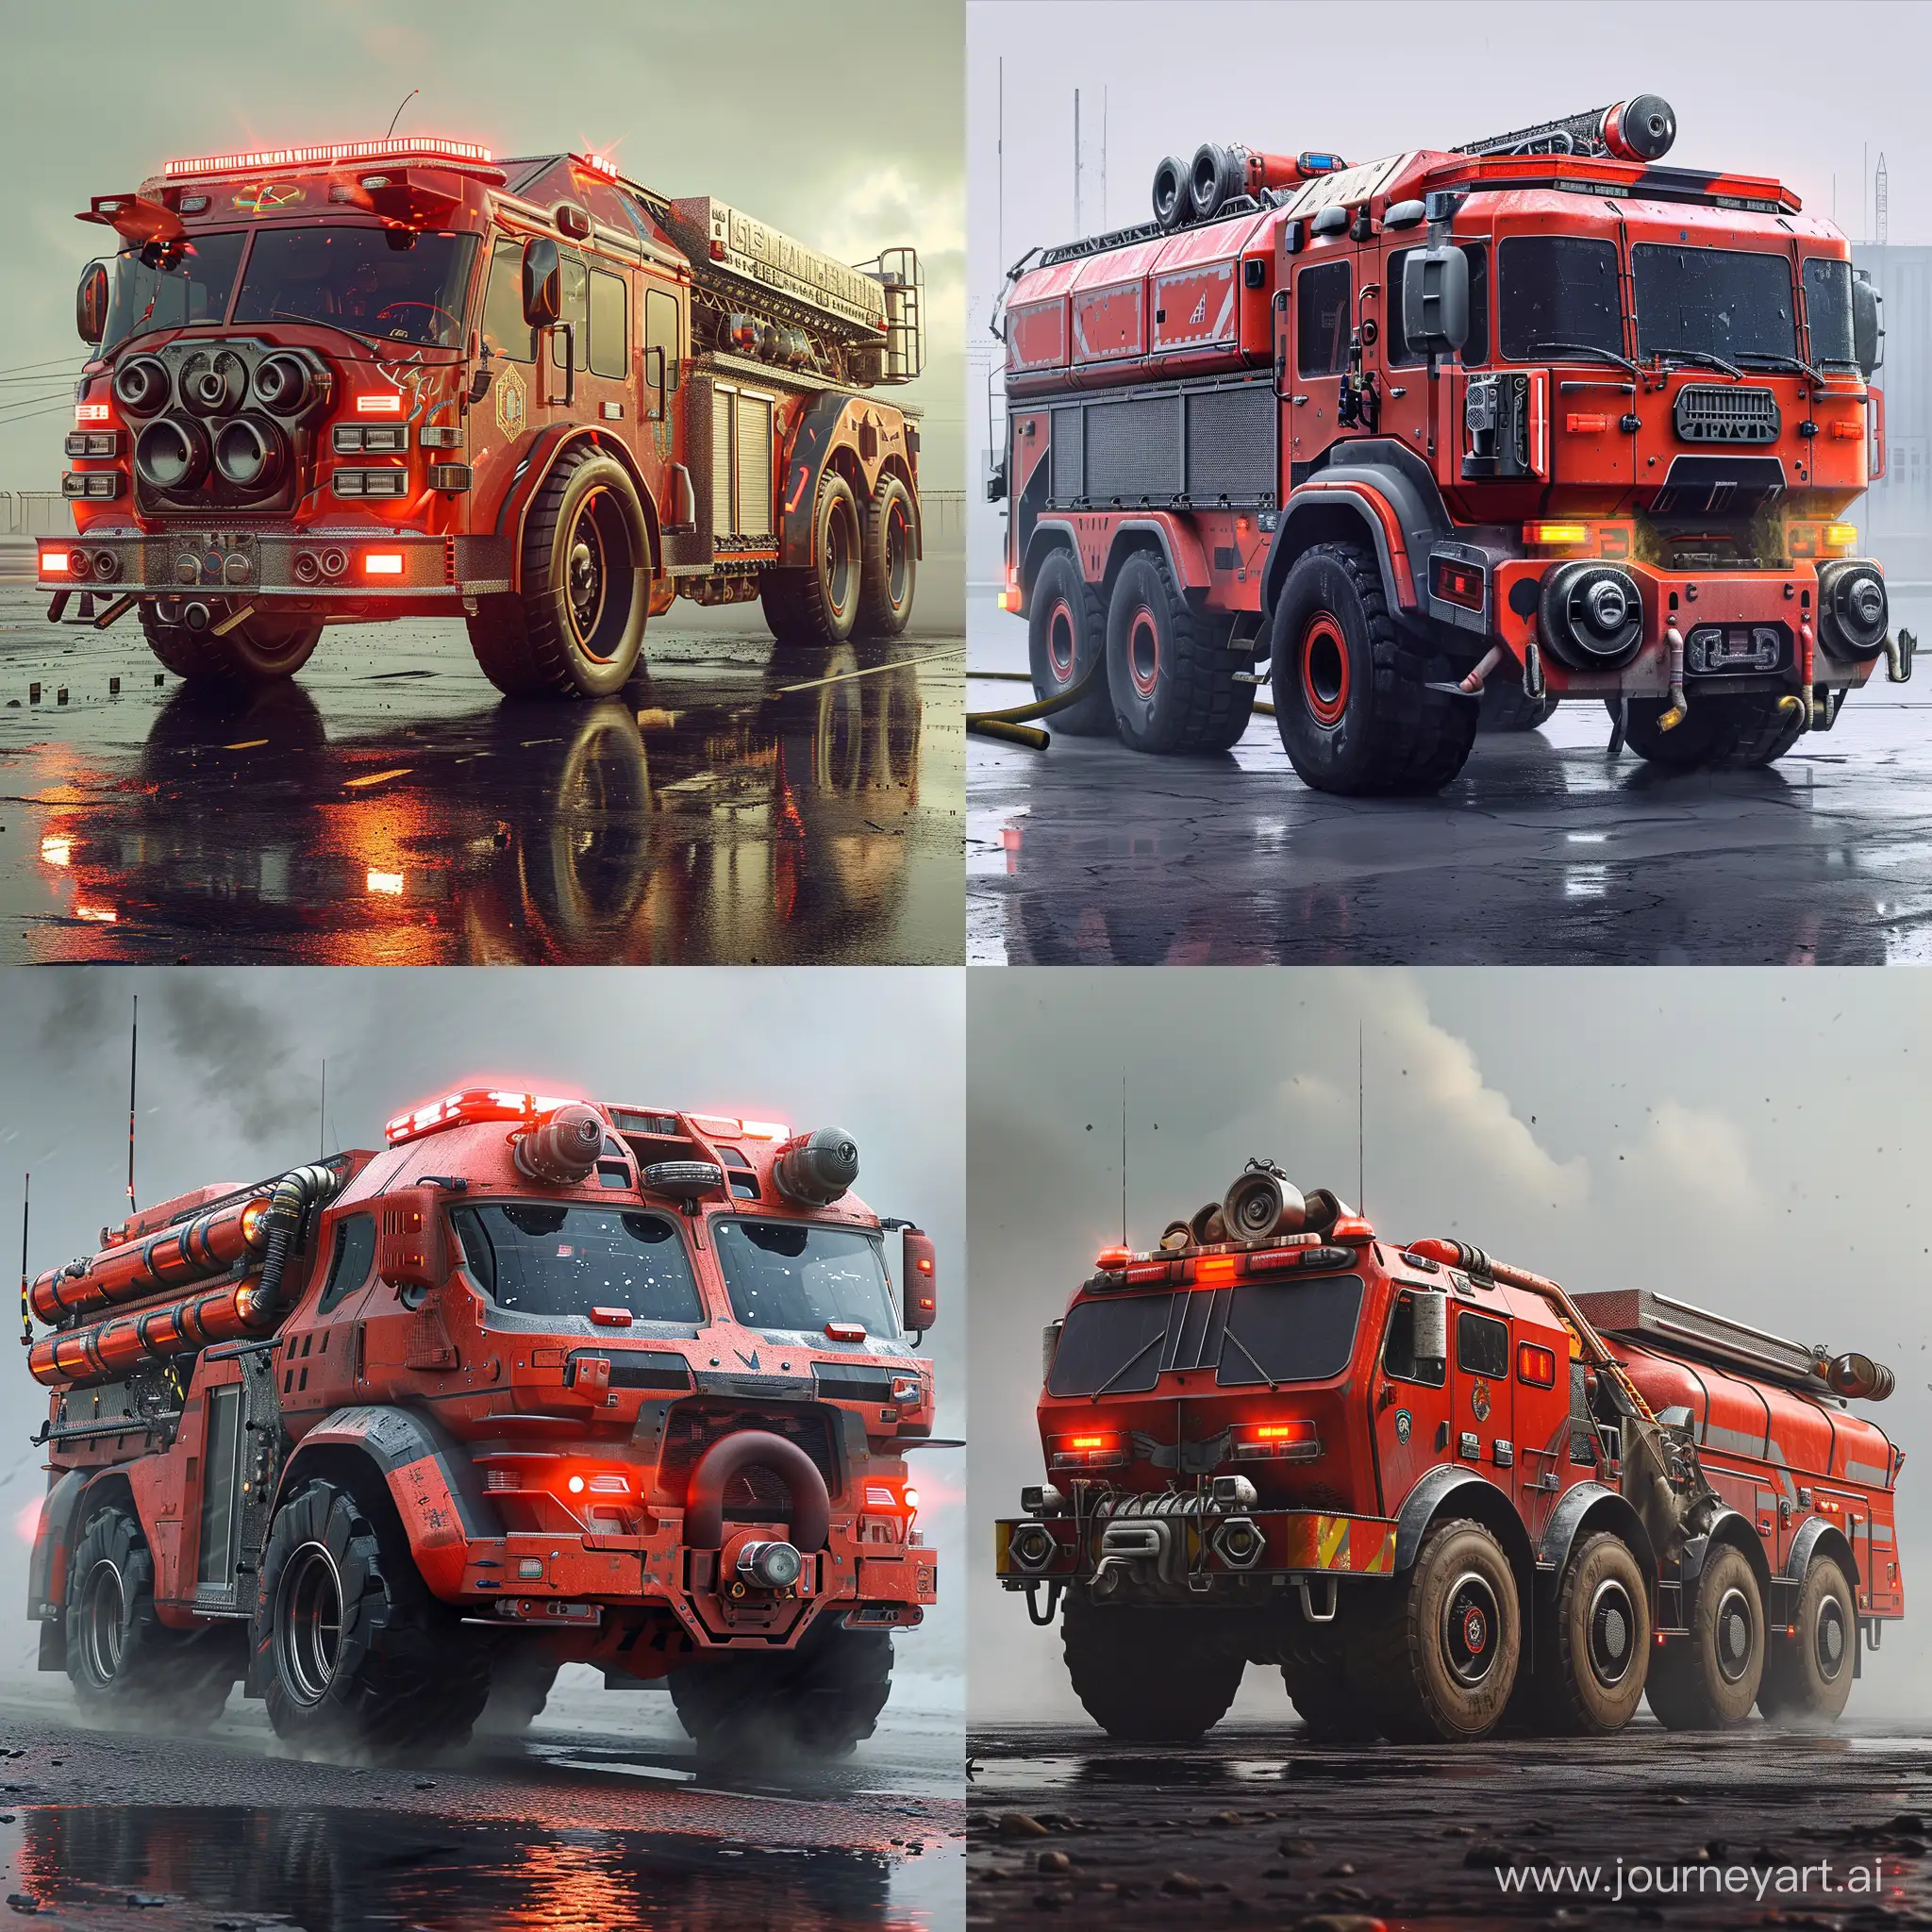 Futuristic-Fire-Truck-in-SciFi-Setting-Responding-to-Emergency